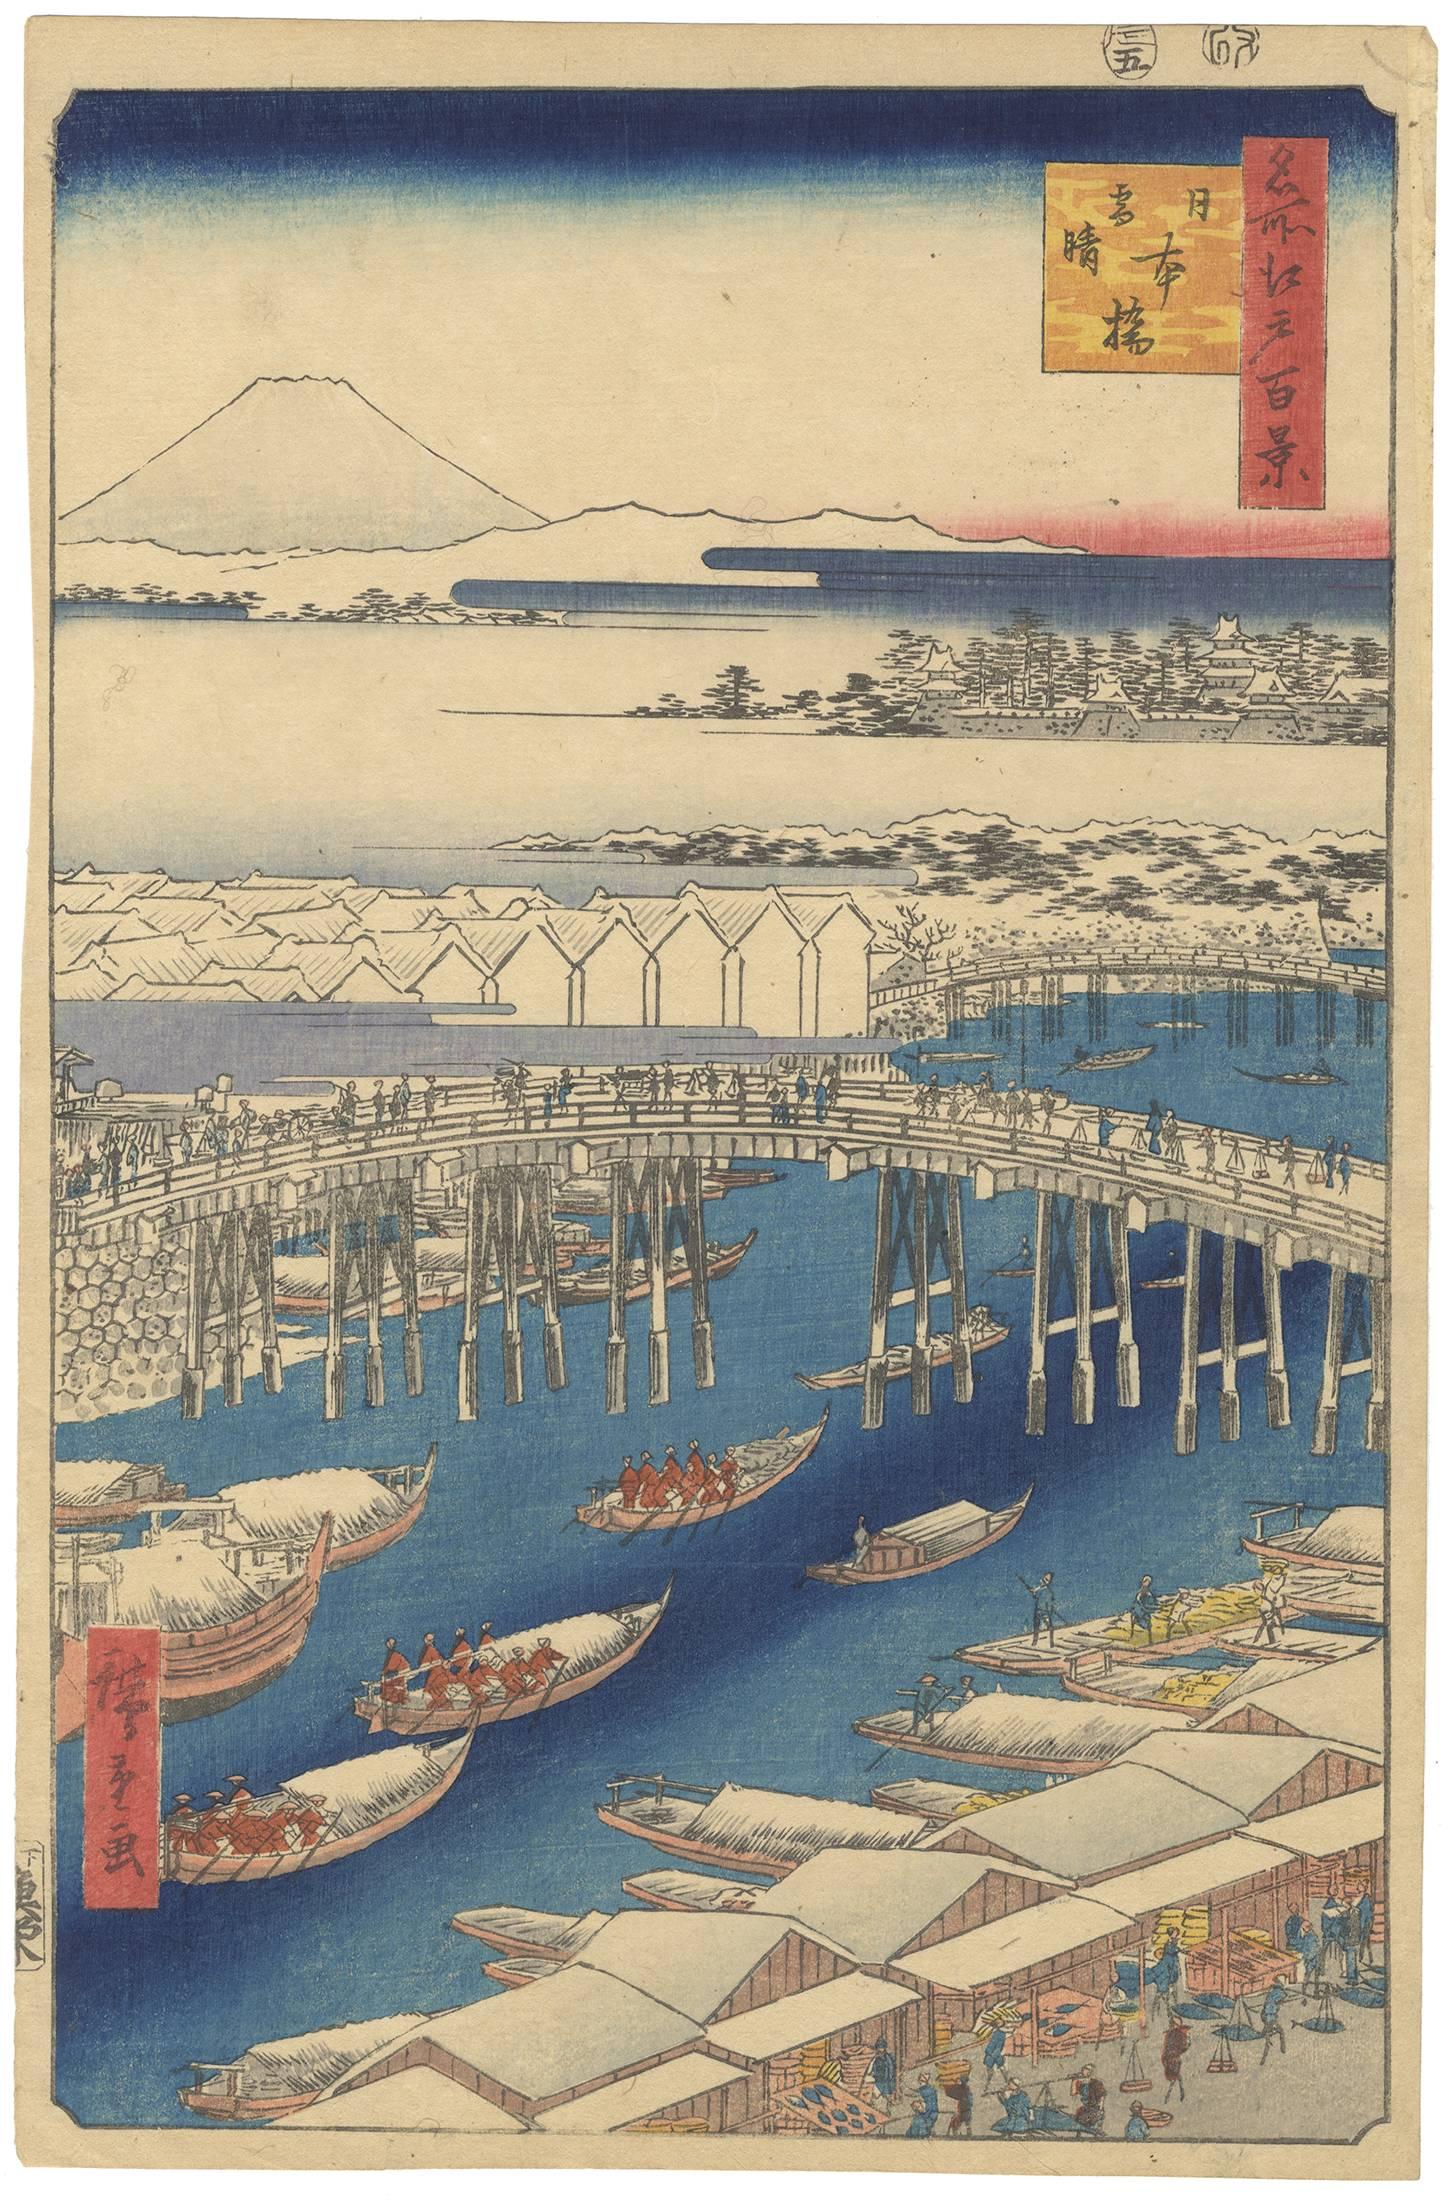 Utagawa Hiroshige (Ando Hiroshige) Landscape Print - Hiroshige, Mount Fuji, Nihonbashi, Japanese Woodblock Print, Landscape, Ukiyo-e